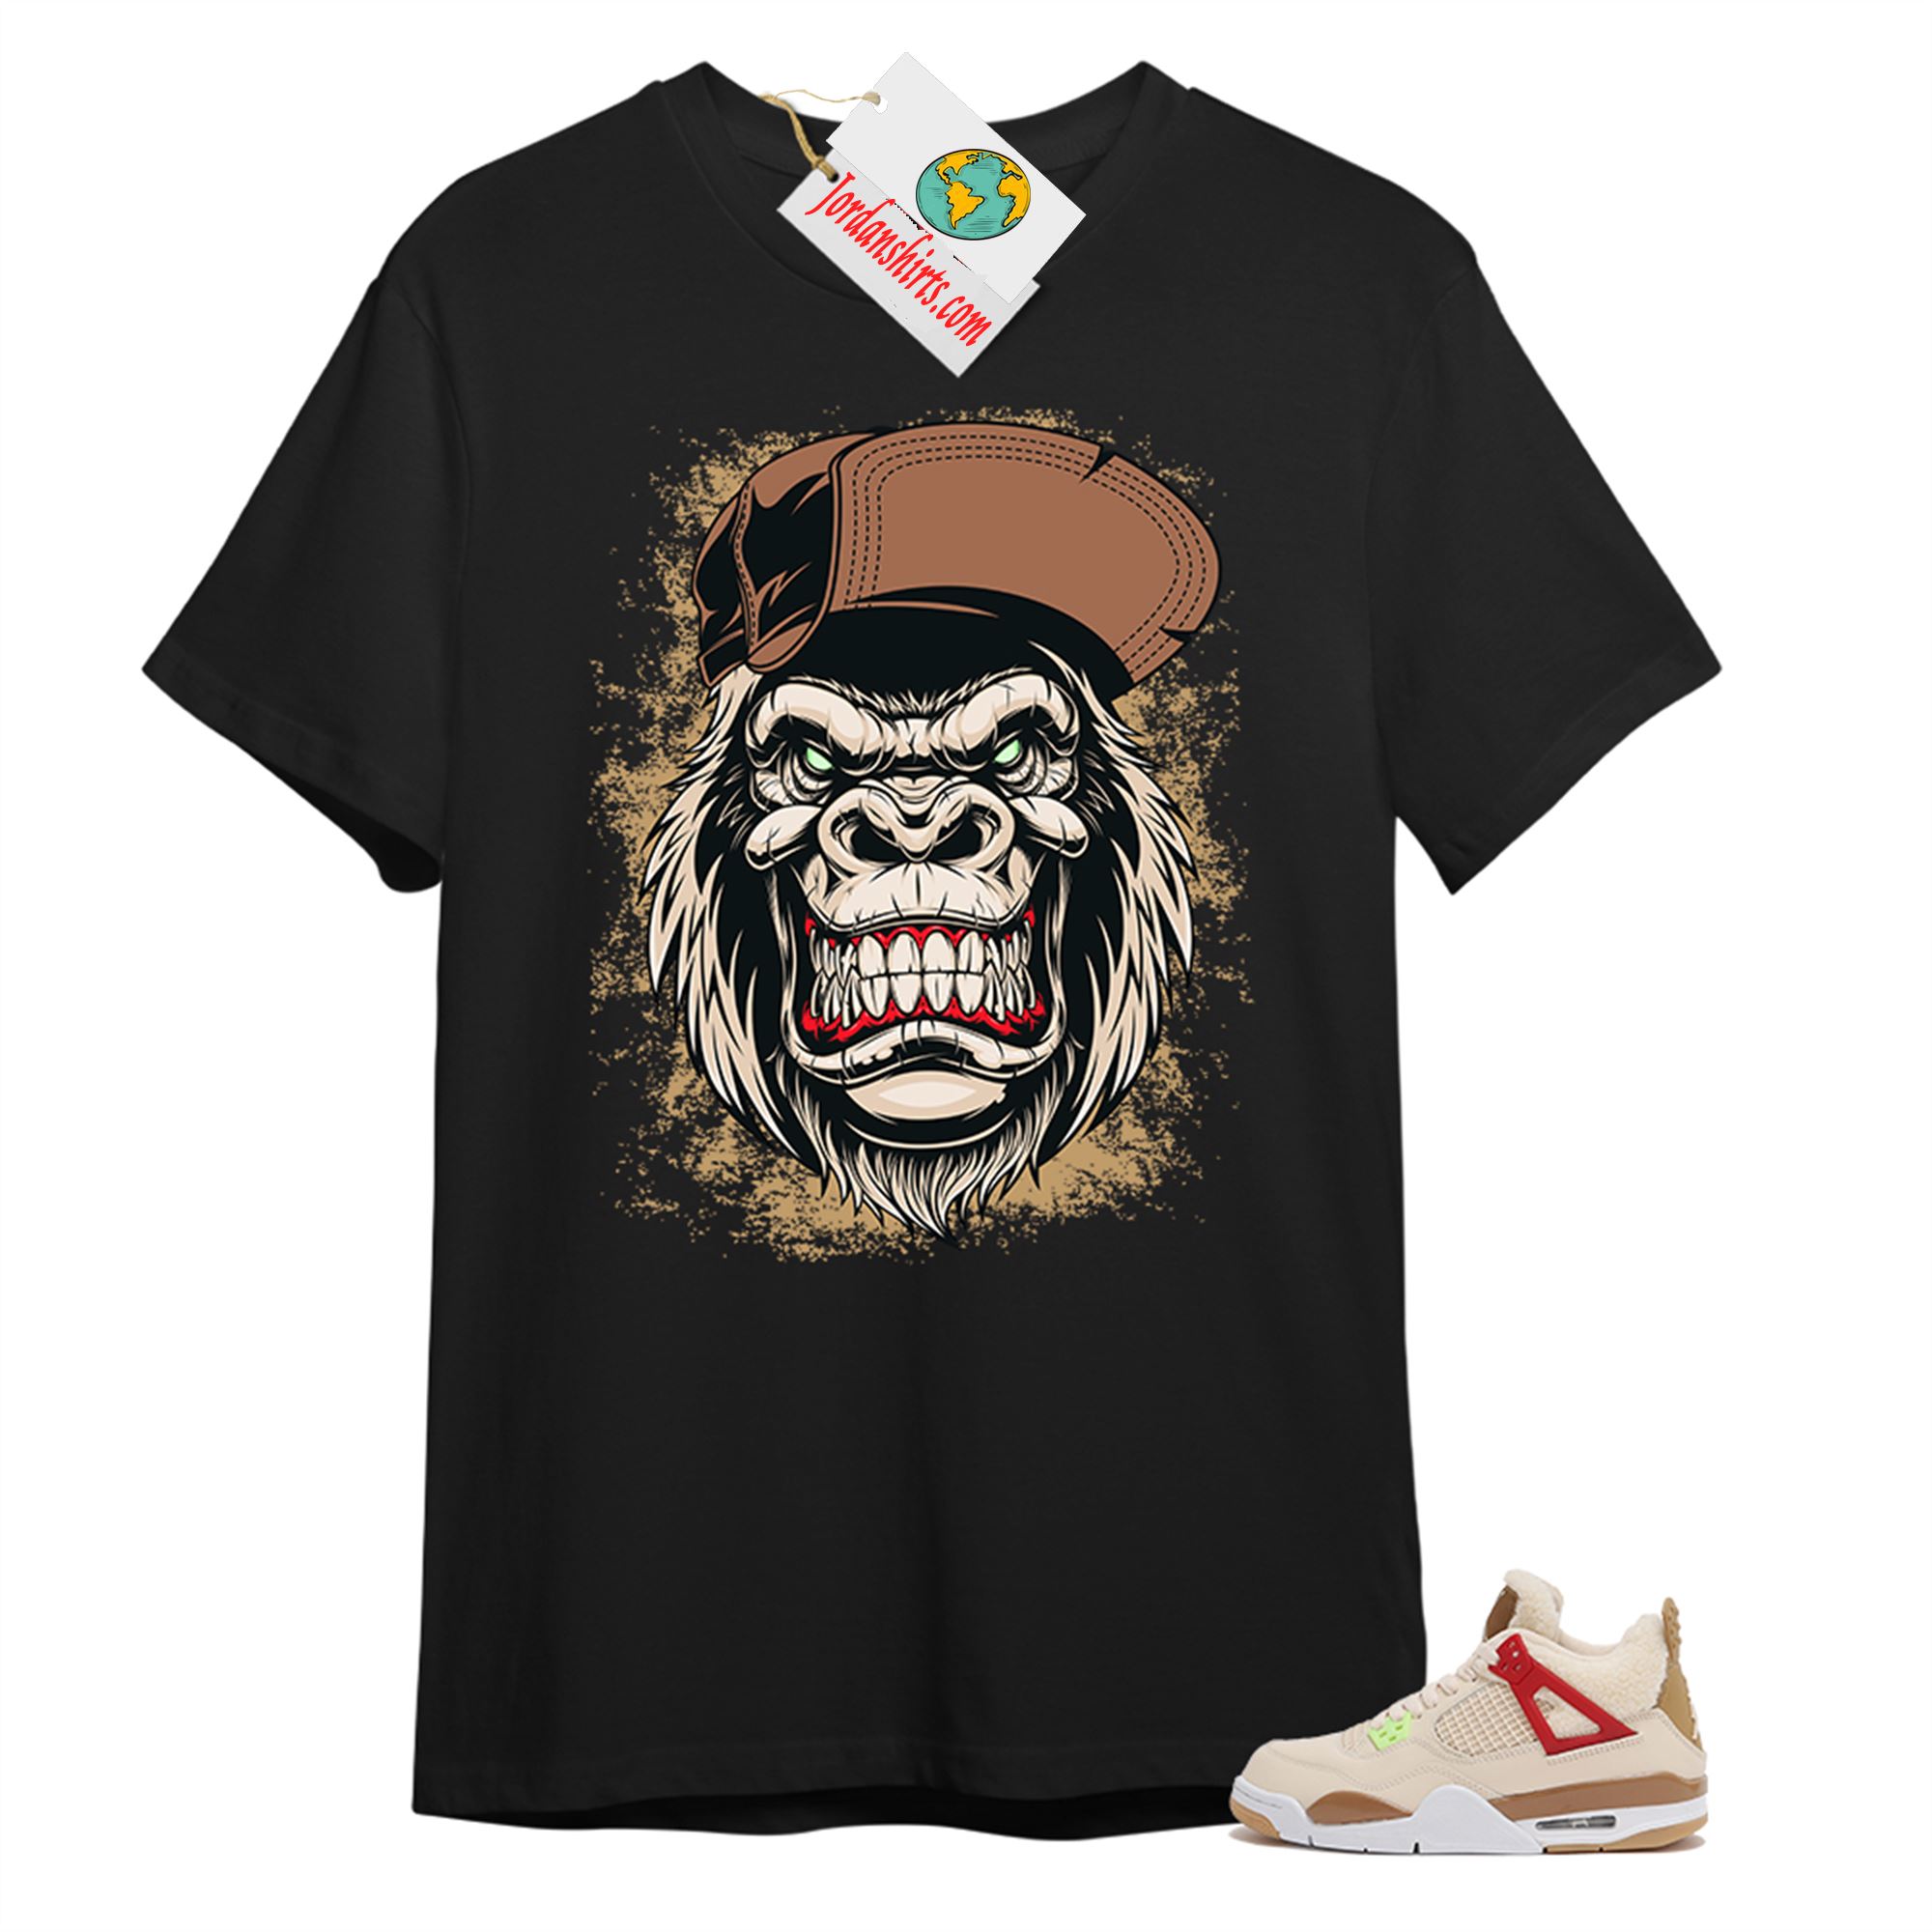 Jordan 4 Shirt, Ferocious Gorilla Black T-shirt Air Jordan 4 Wild Things 4s Size Up To 5xl